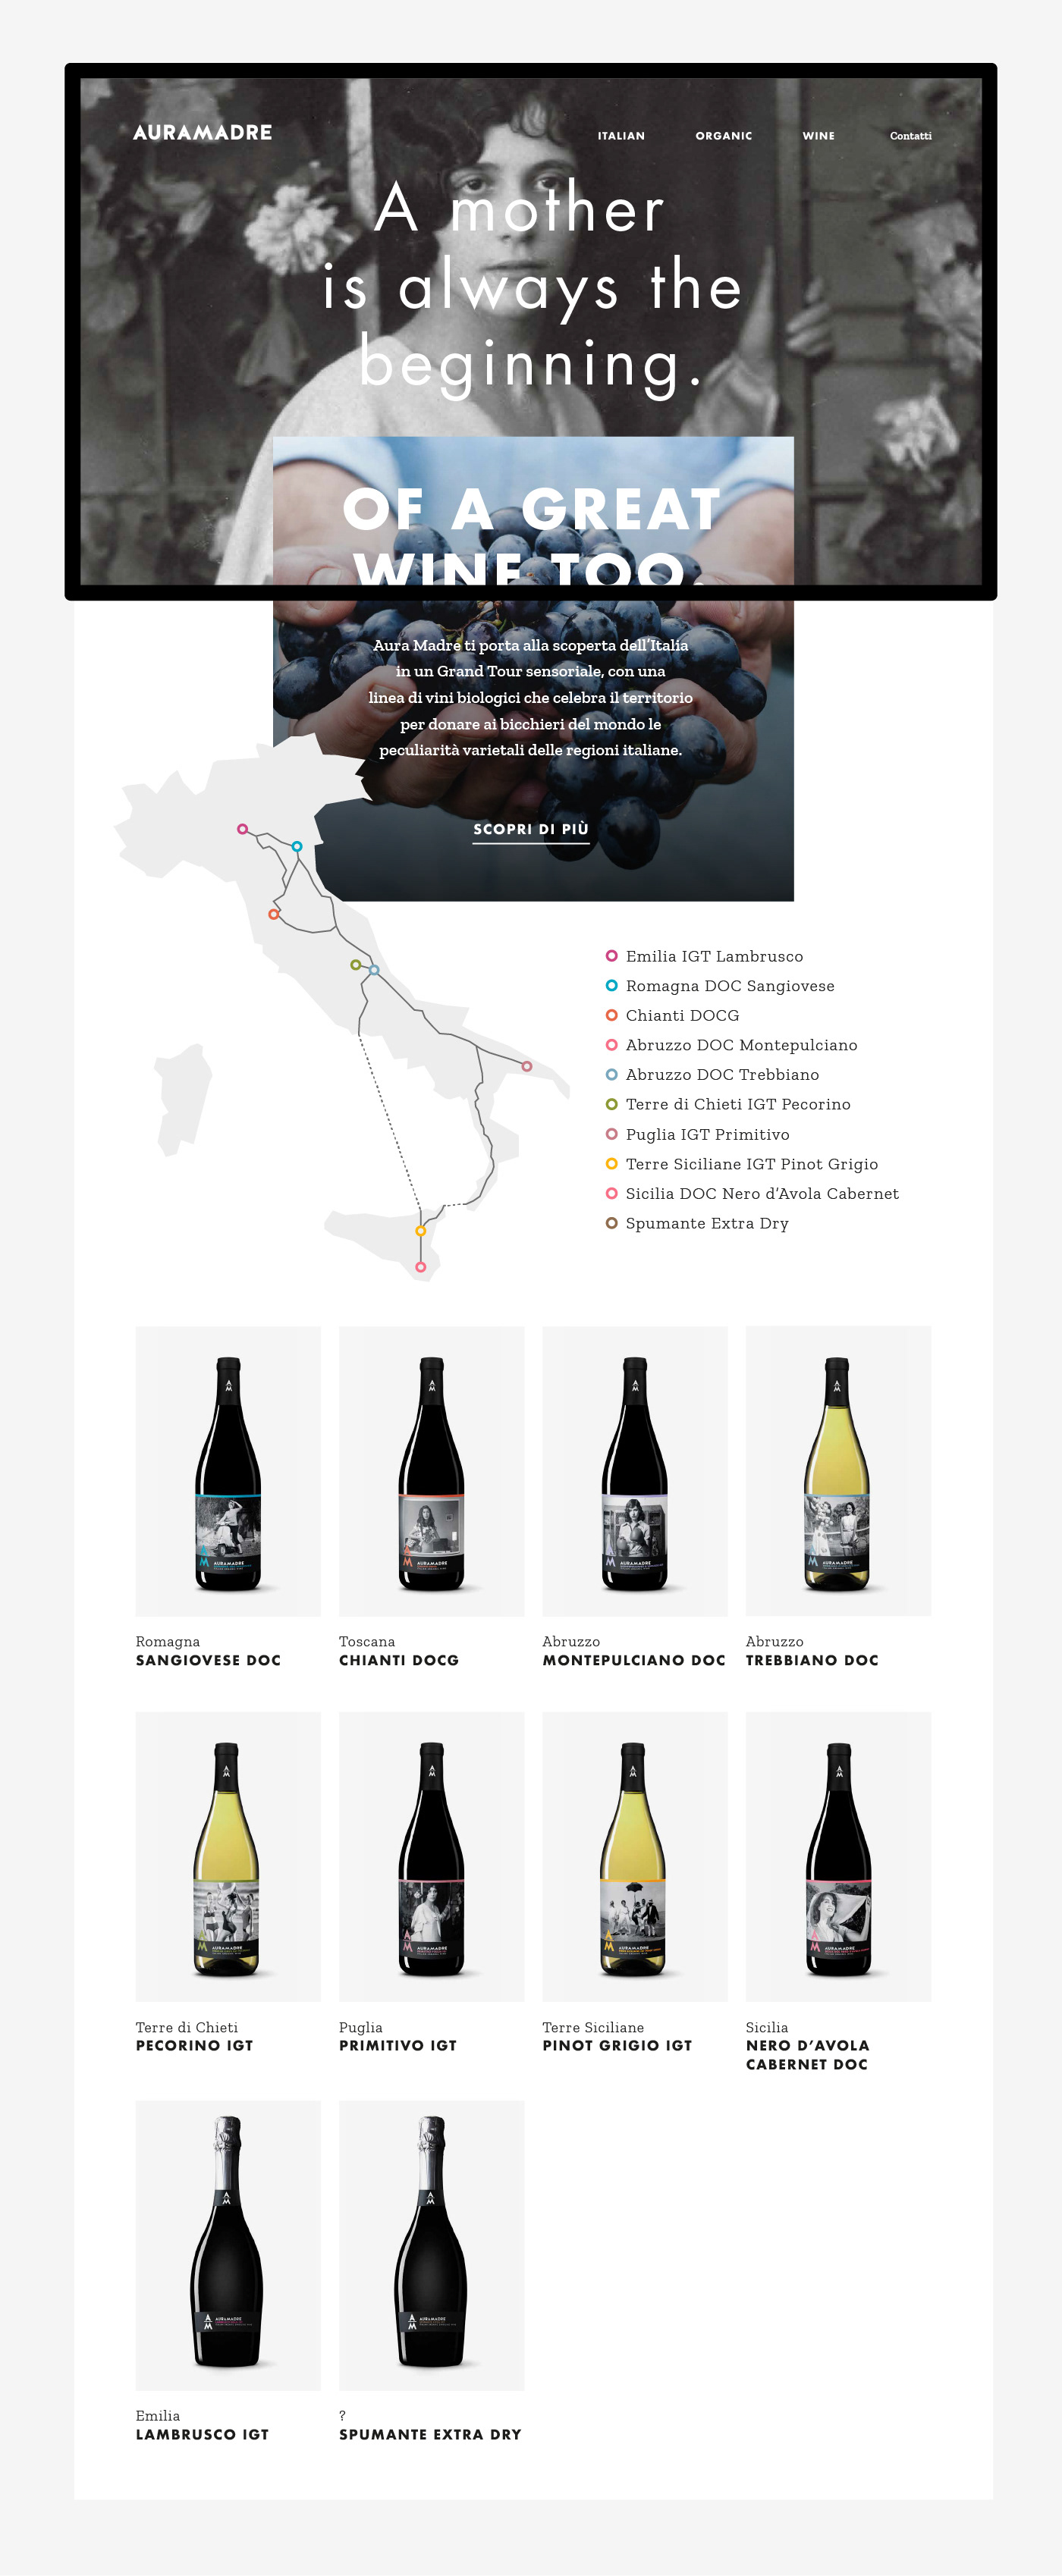 dolce vita grand tour italian wine label design made in italy organic wine travel guide wine bottle design wine website women wine